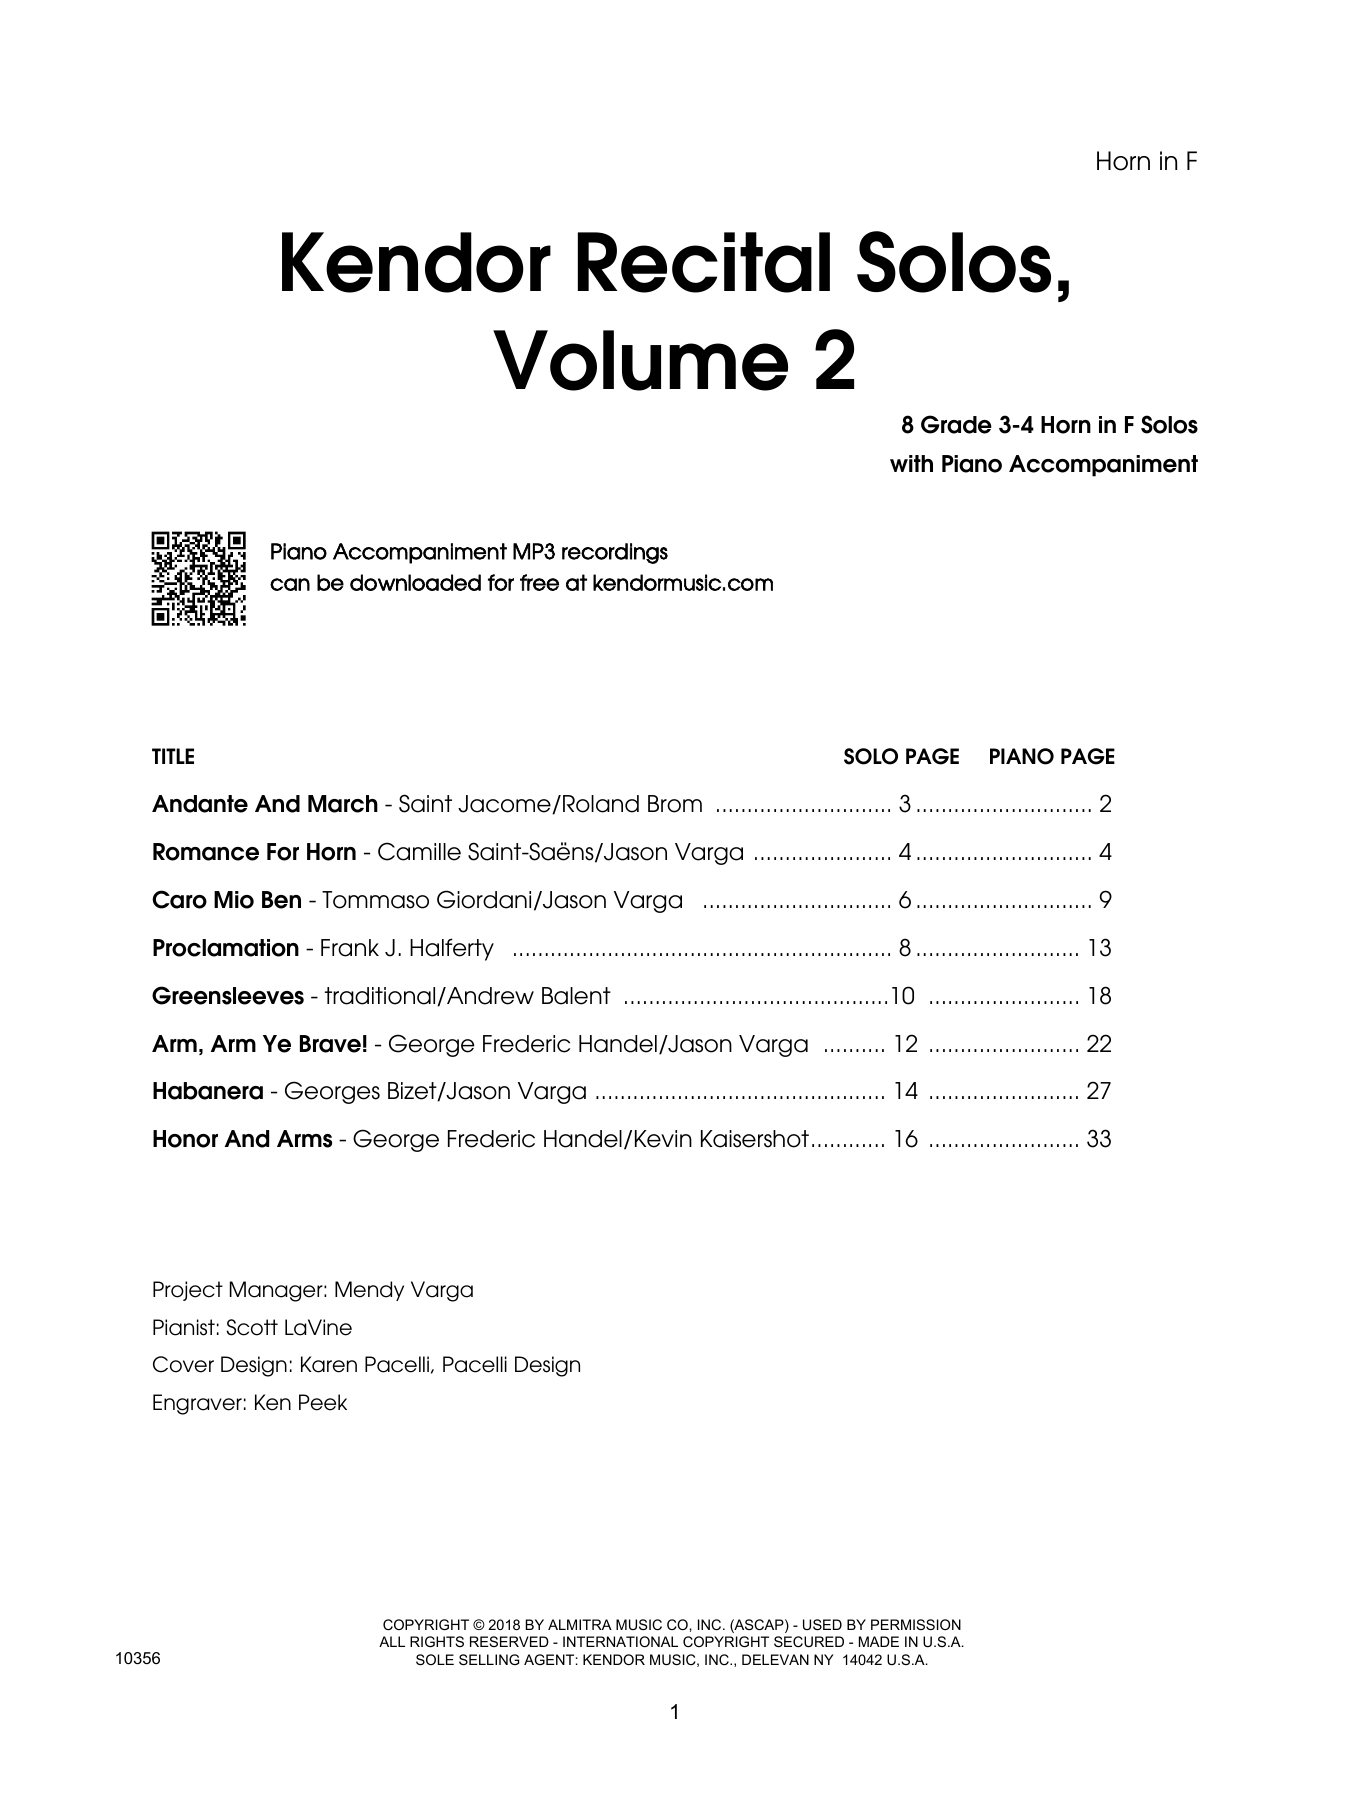 Download Various Kendor Recital Solos, Volume 2 - Horn i Sheet Music